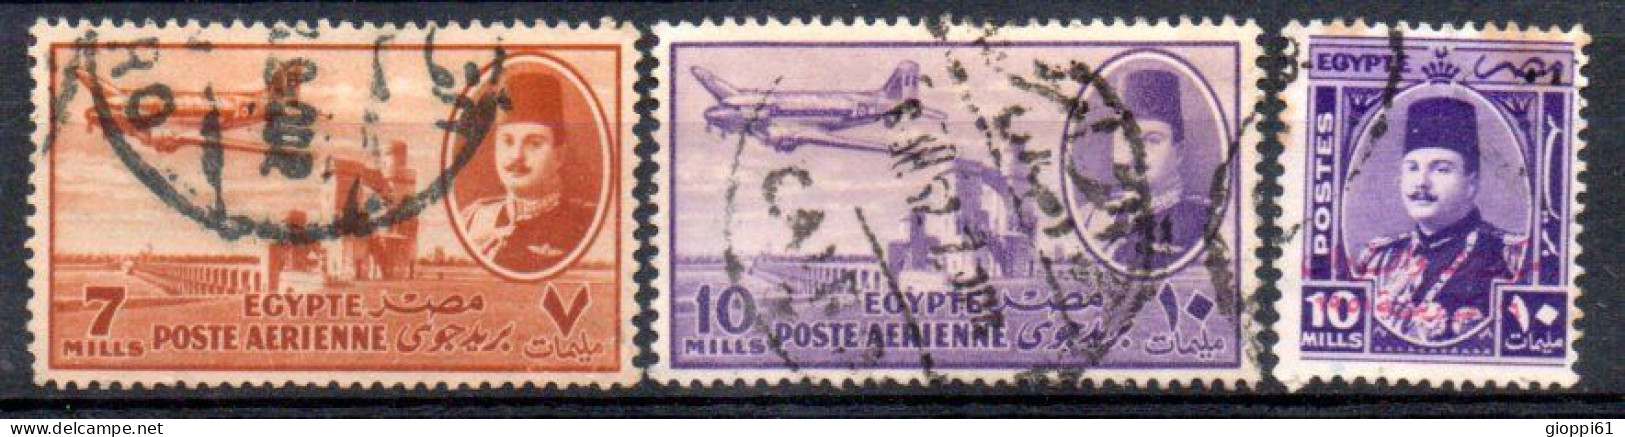 1952 Egitto - Posta Aerea + Commemorativo - Used Stamps